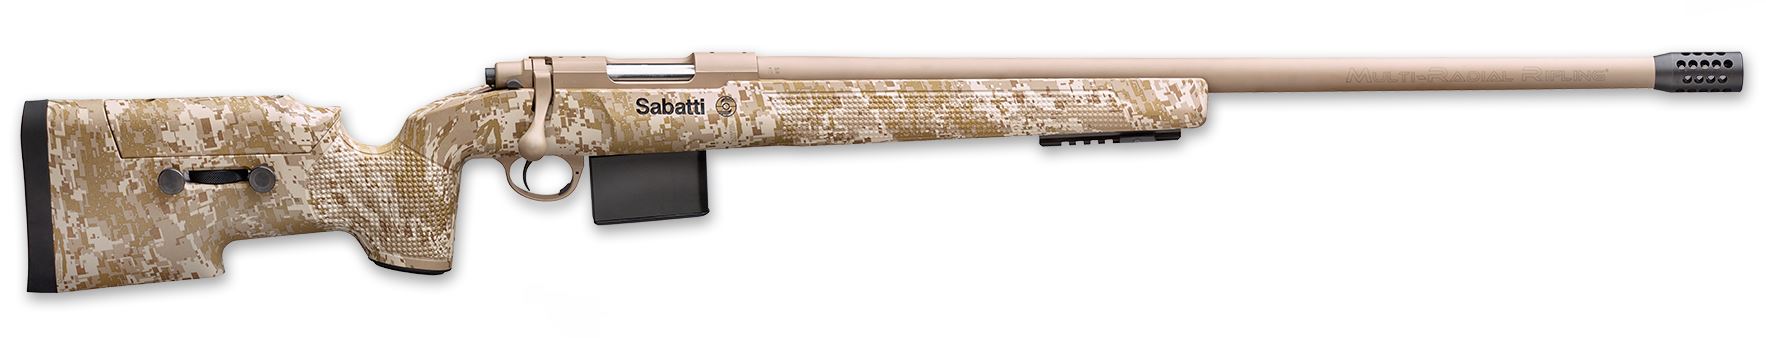 Sabatti Tactical US Desert 6.5 Creedmoor Rifle with Muzzle Brake Open box Display Model Discounted